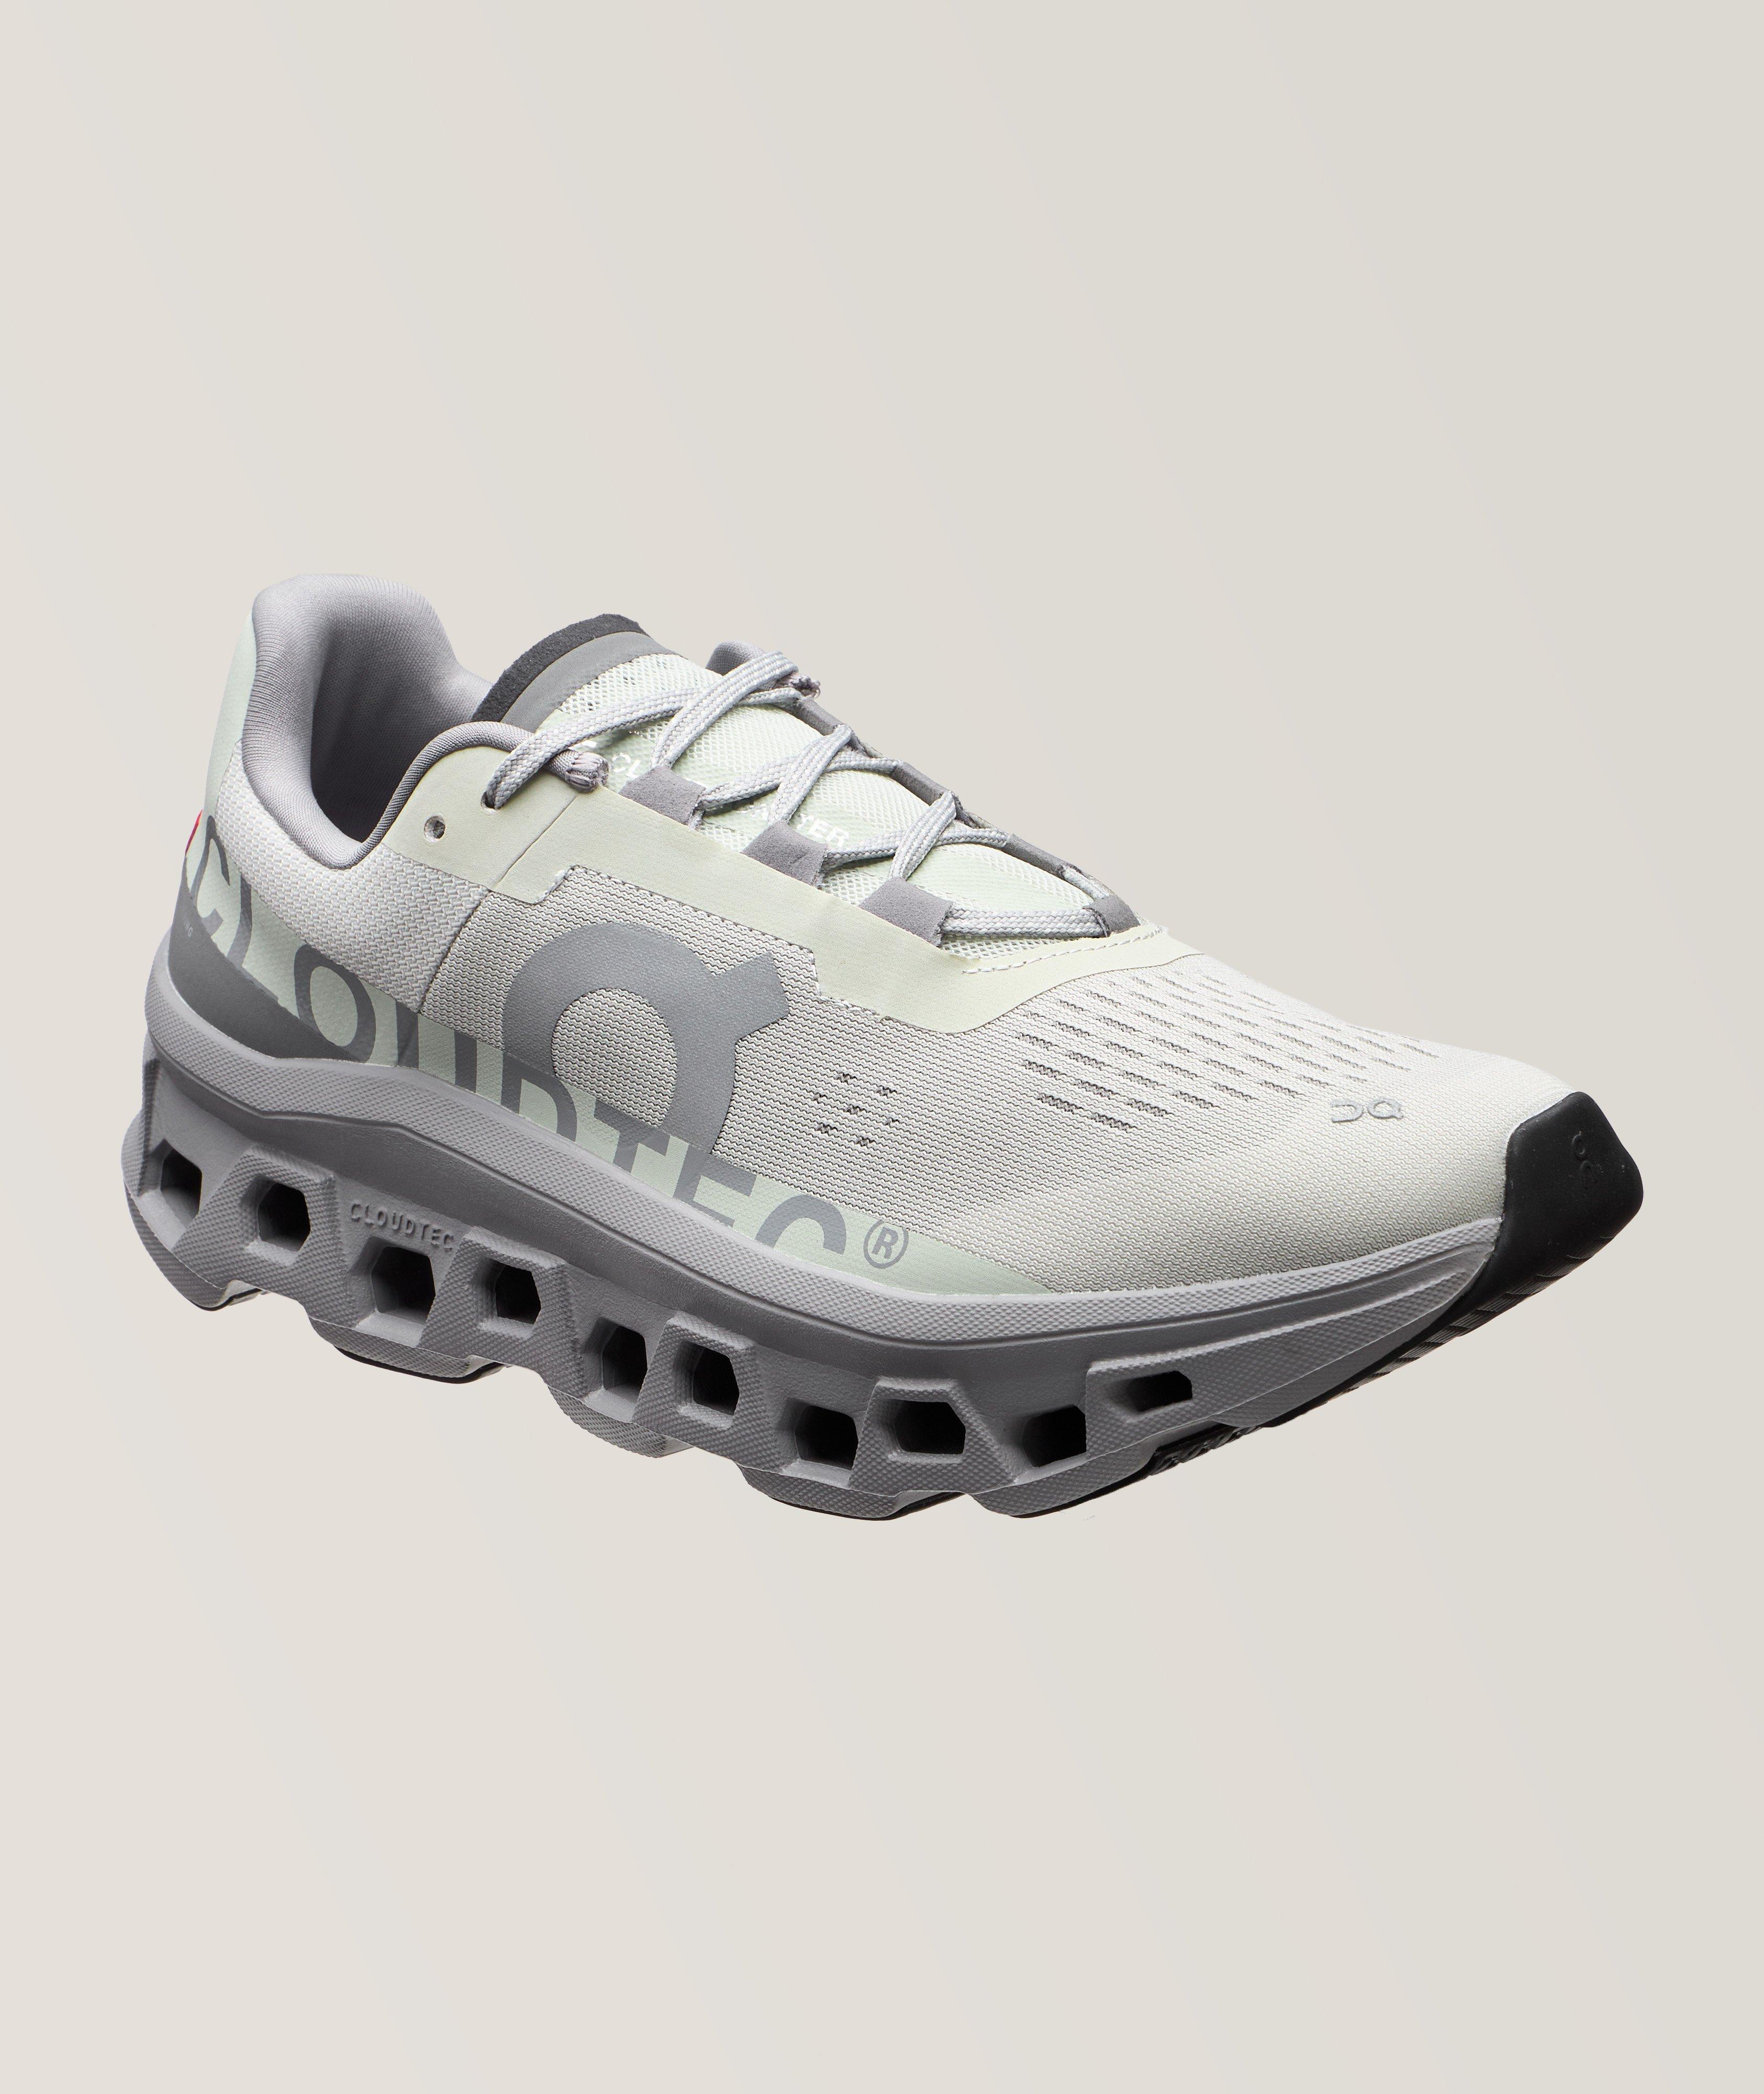 Cloudmonster Sneakers image 0